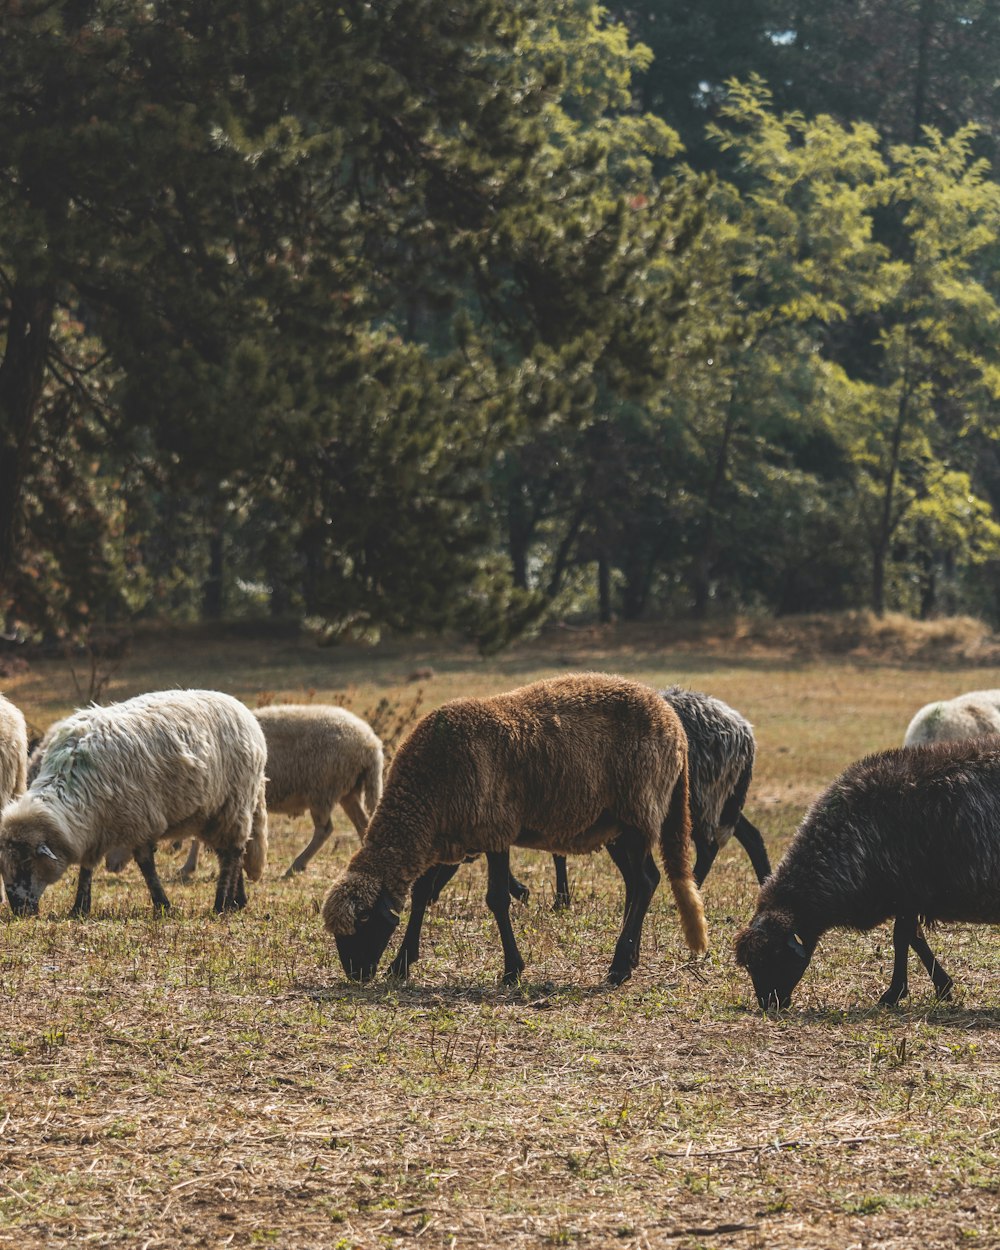 a herd of sheep grazing on a dry grass field